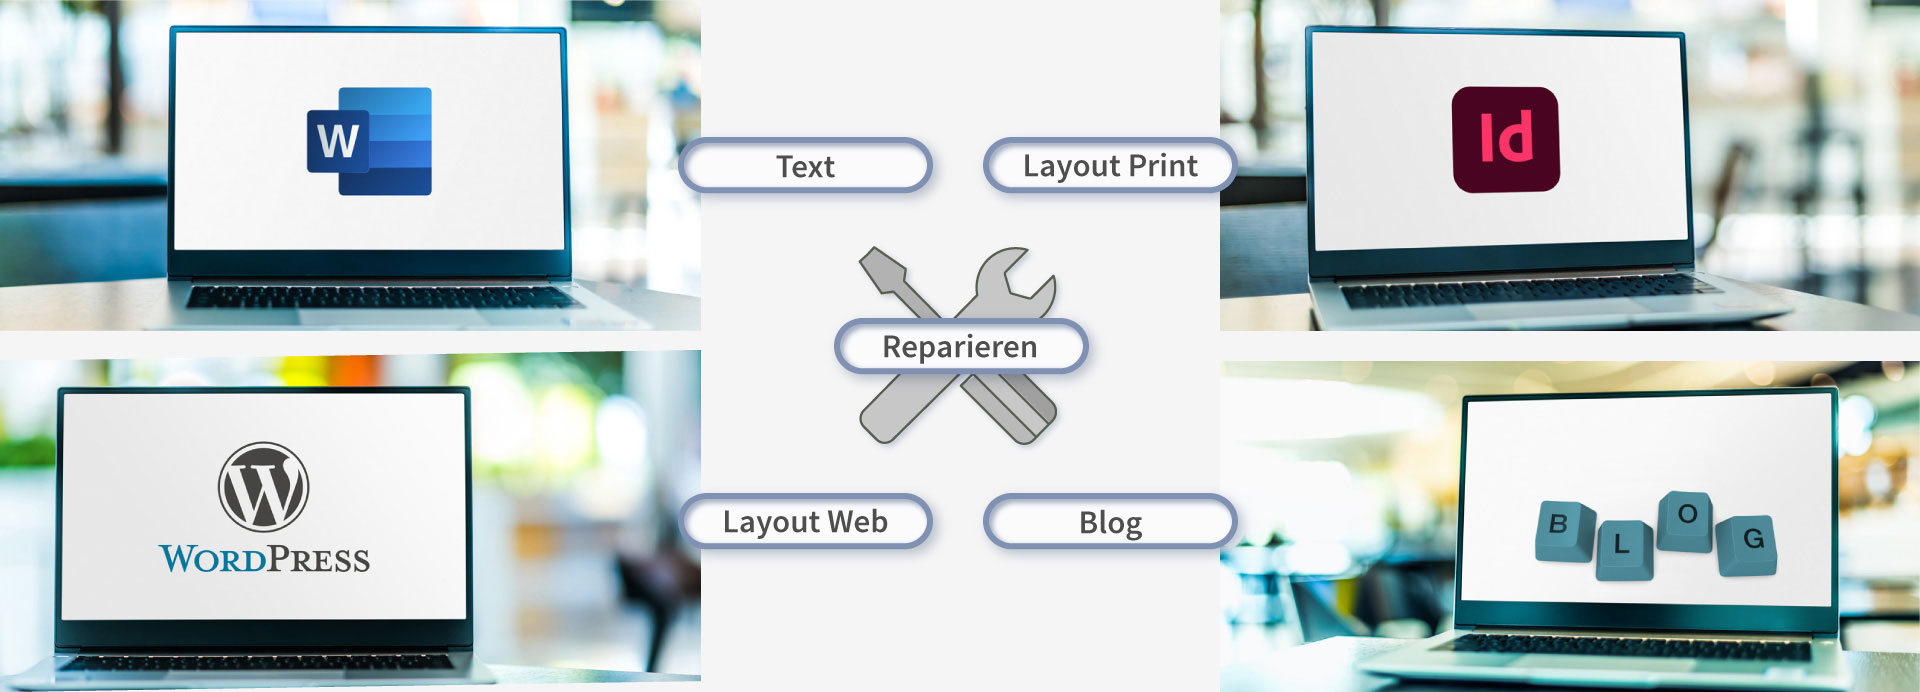 Text Layout Print Web Blog Reparieren